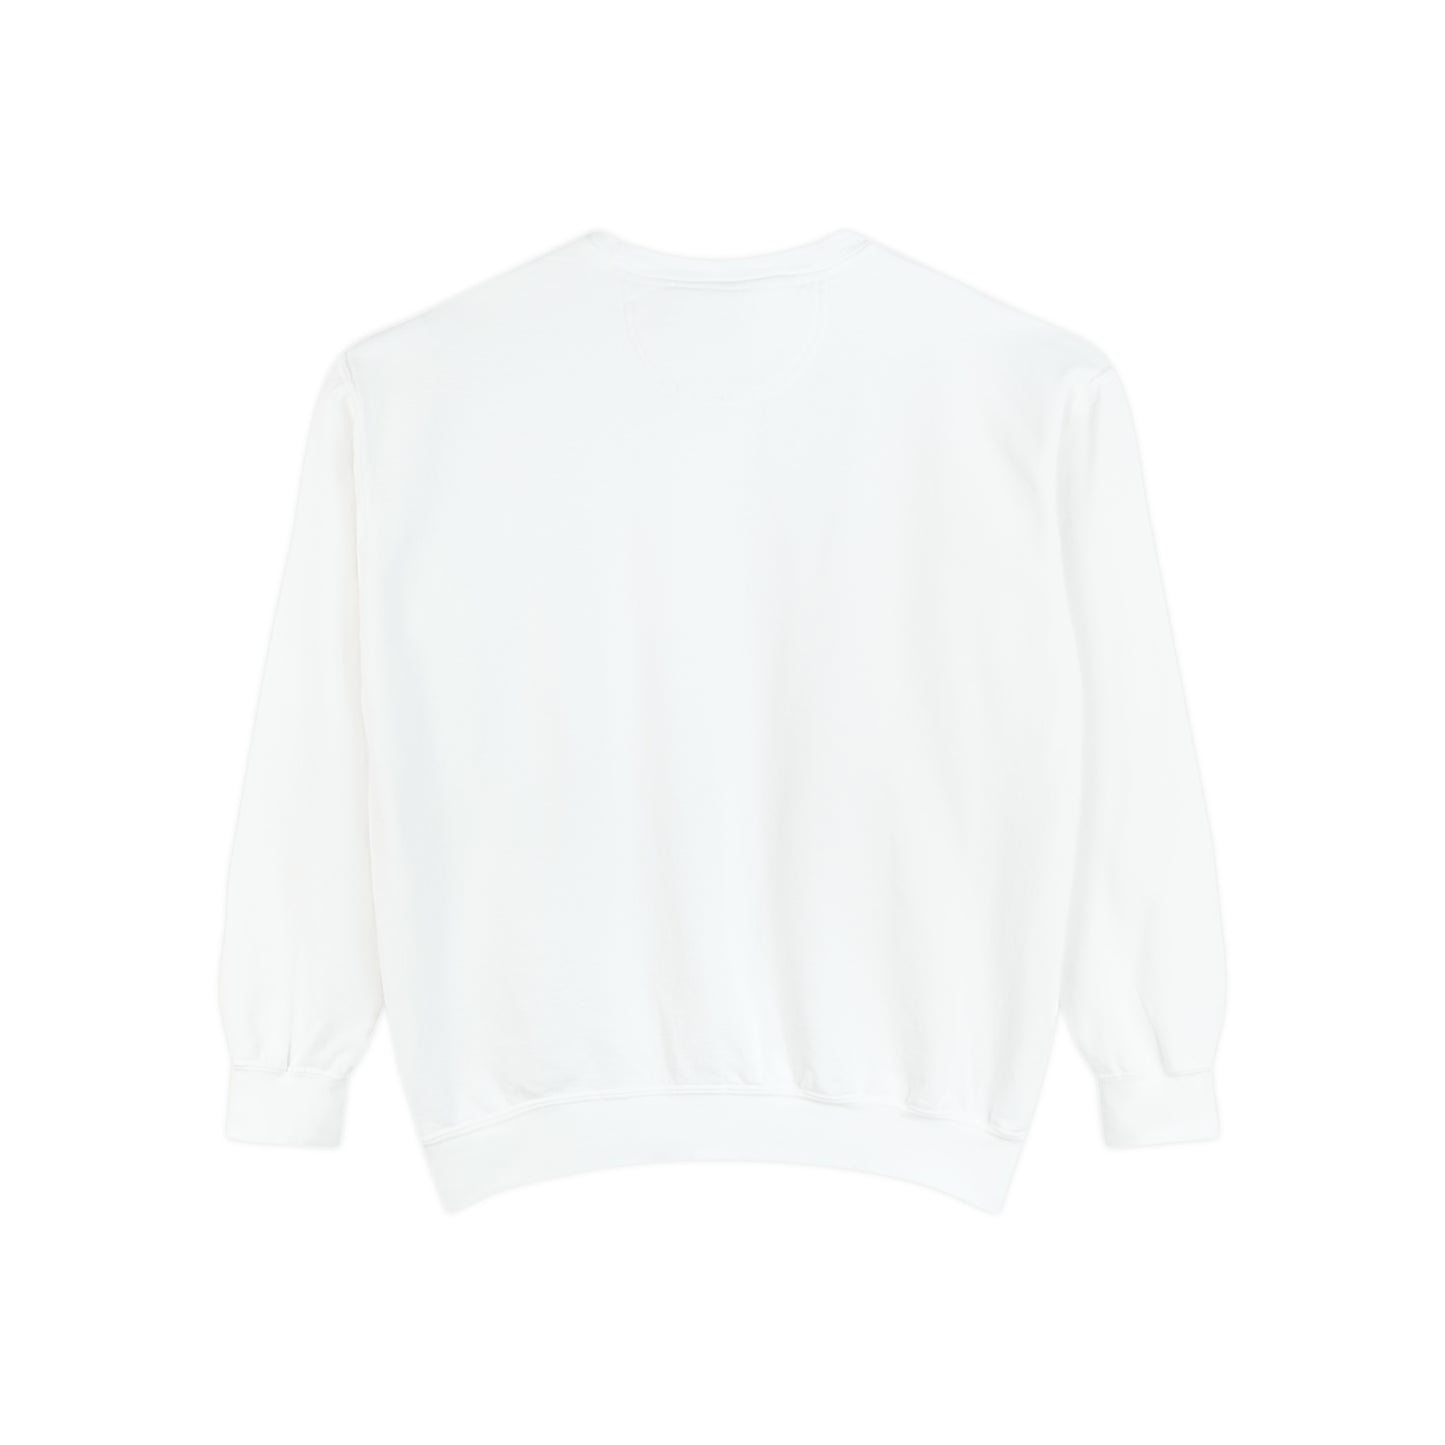 Mount Etna Unisex Garment-Dyed Sweatshirt